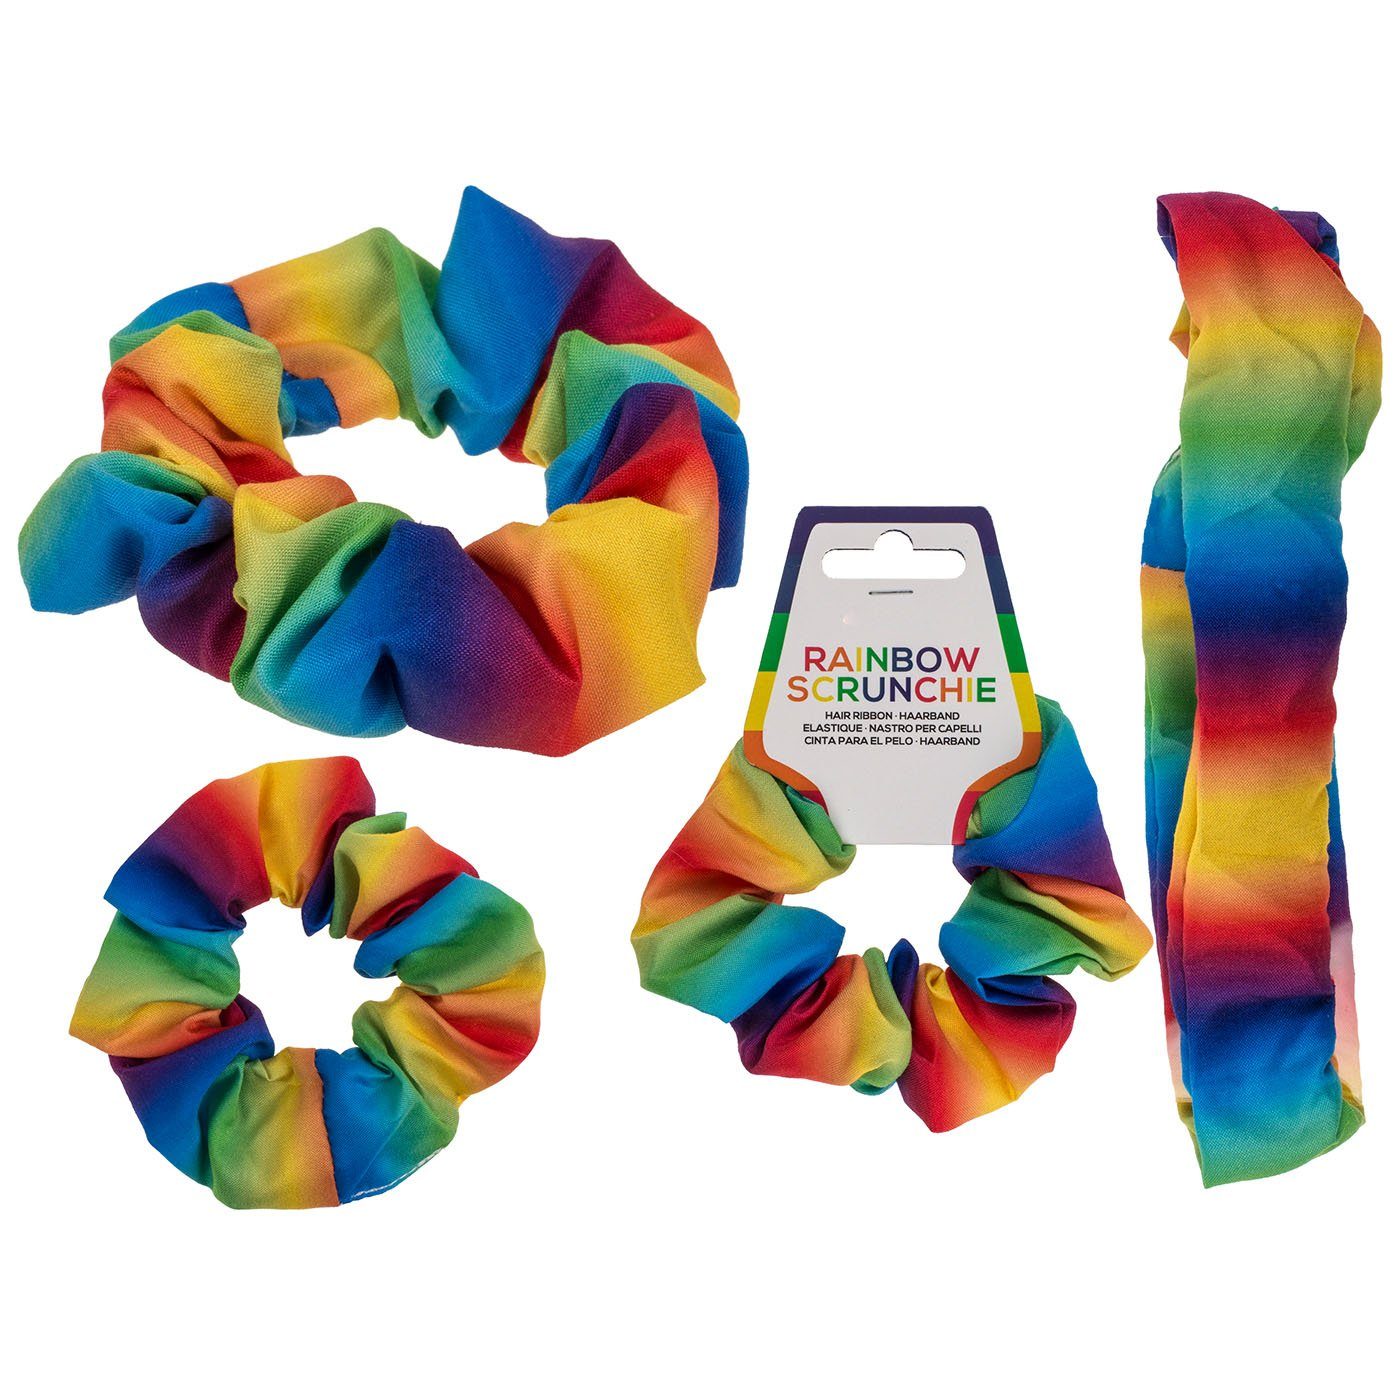 Haarband Regenbogen ReWu Textil-Haarband Pride Scrunchie